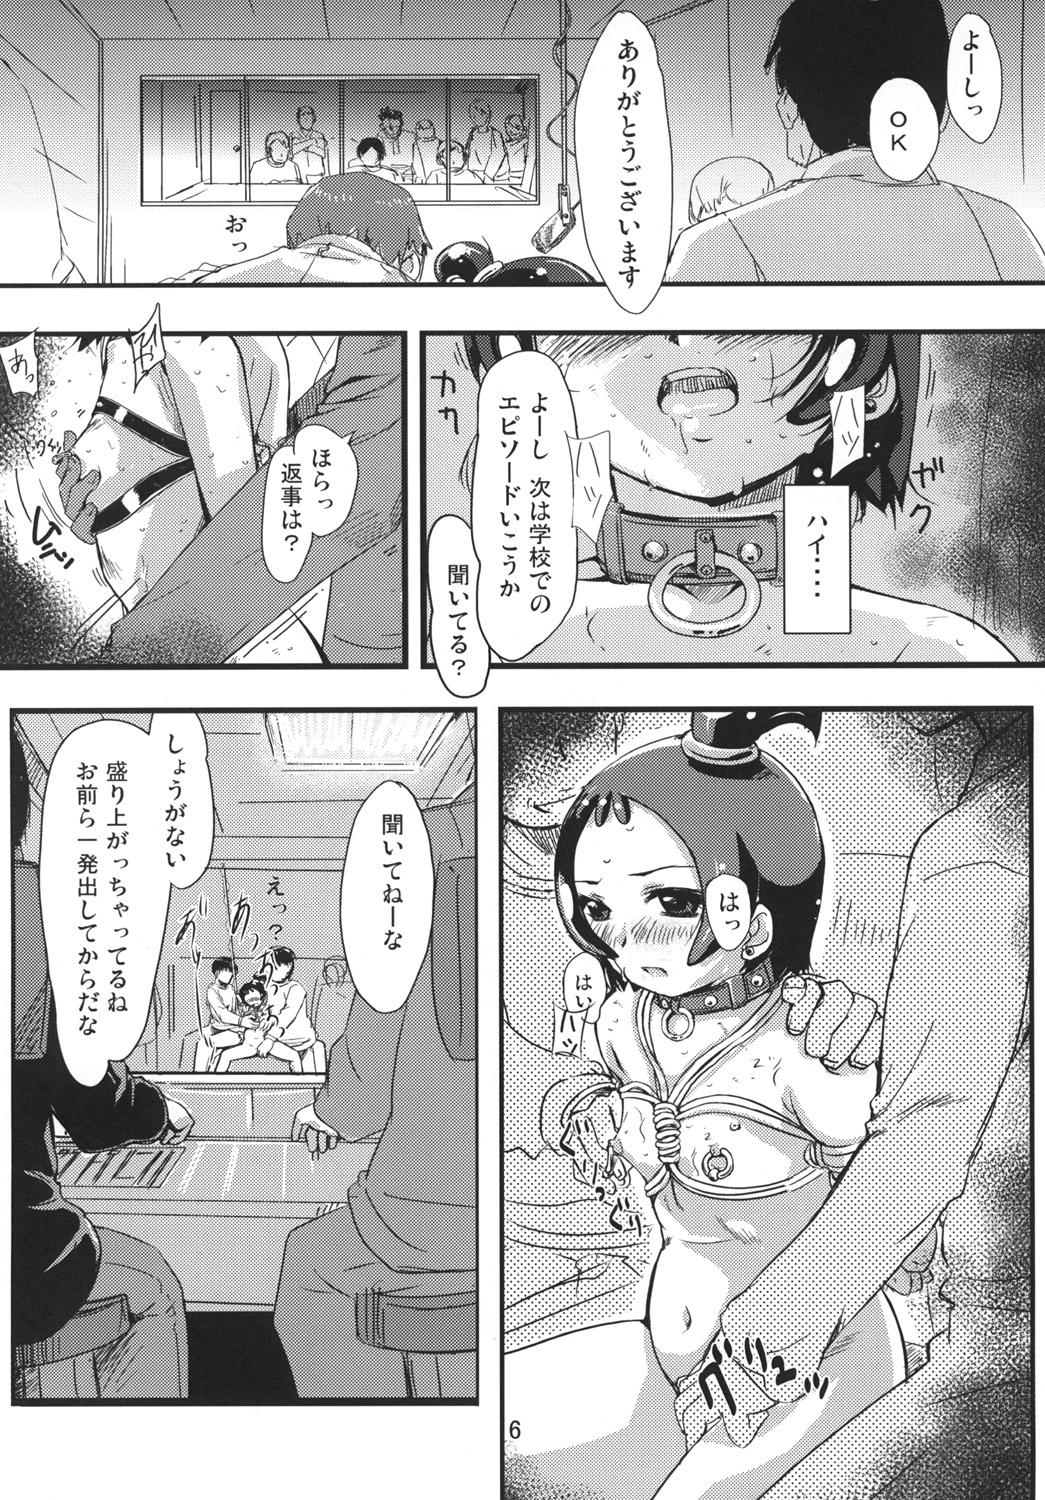 Neighbor Onpu Zukushi 9 - Ojamajo doremi Wet - Page 5